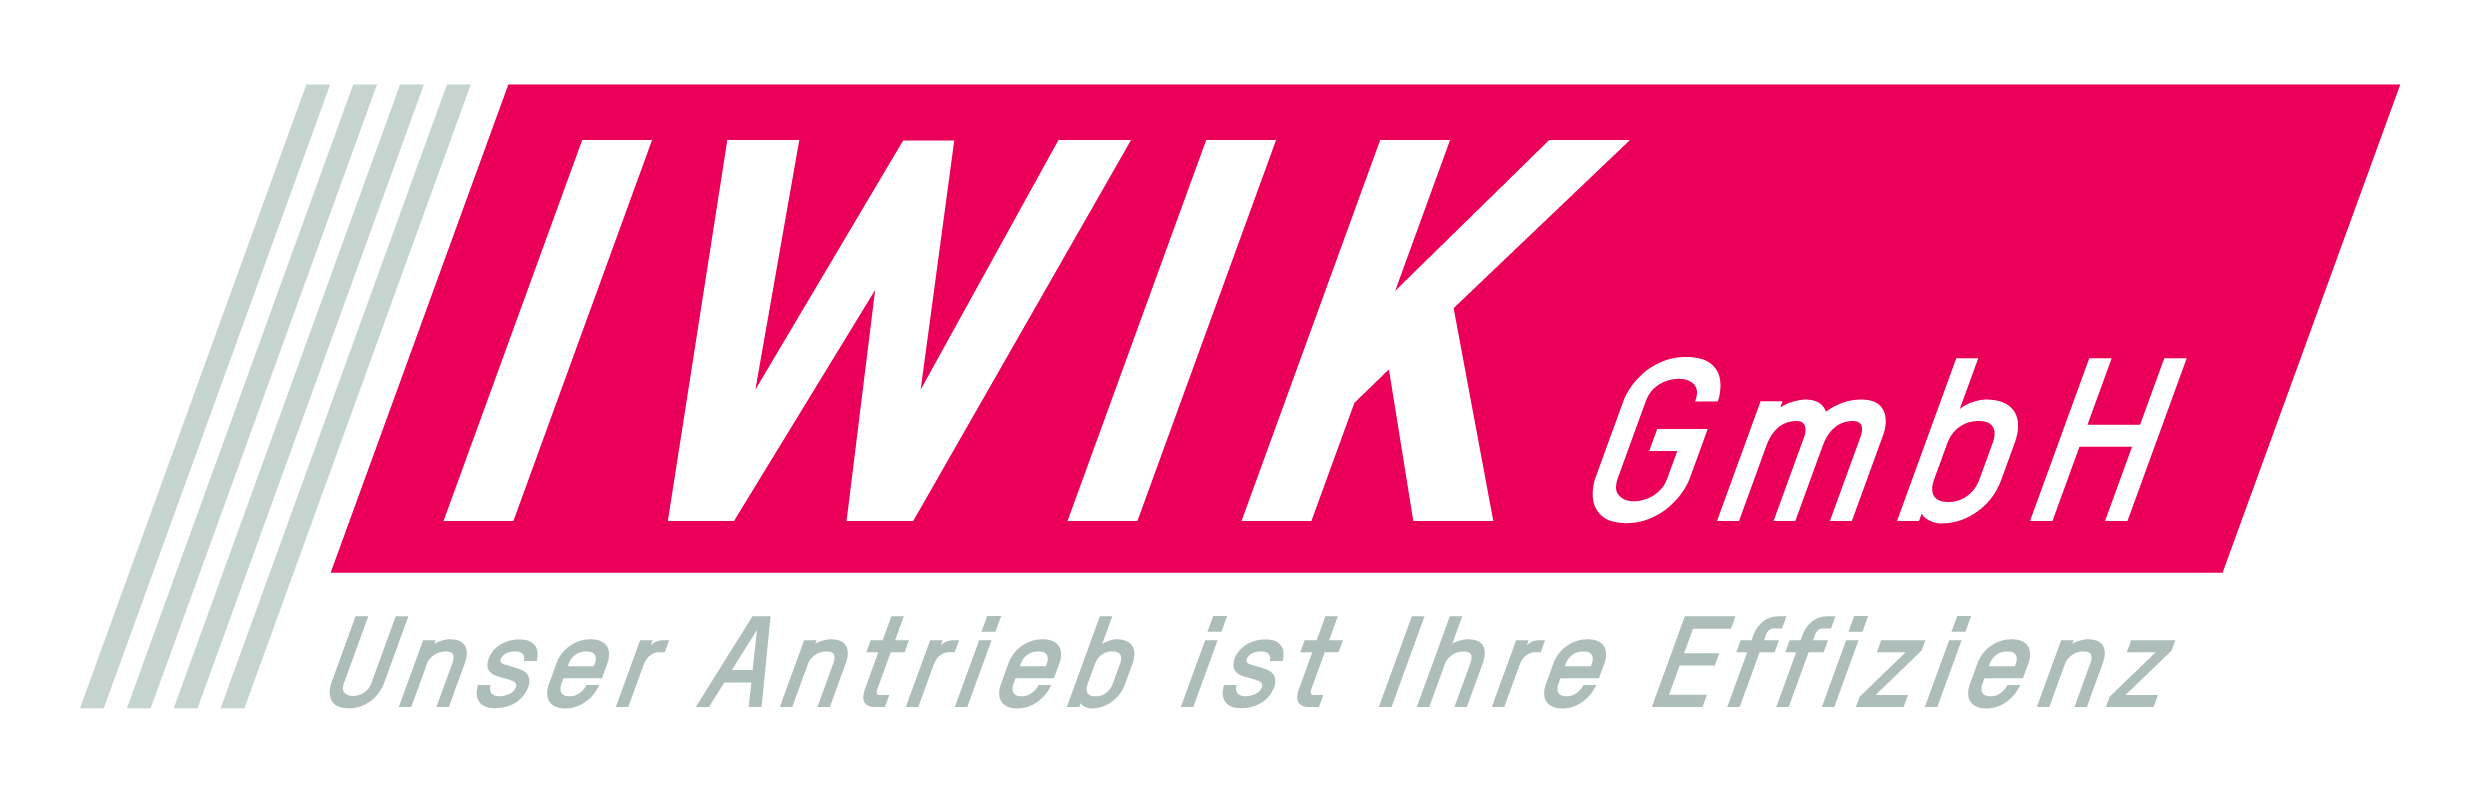 IWIK_GmbH